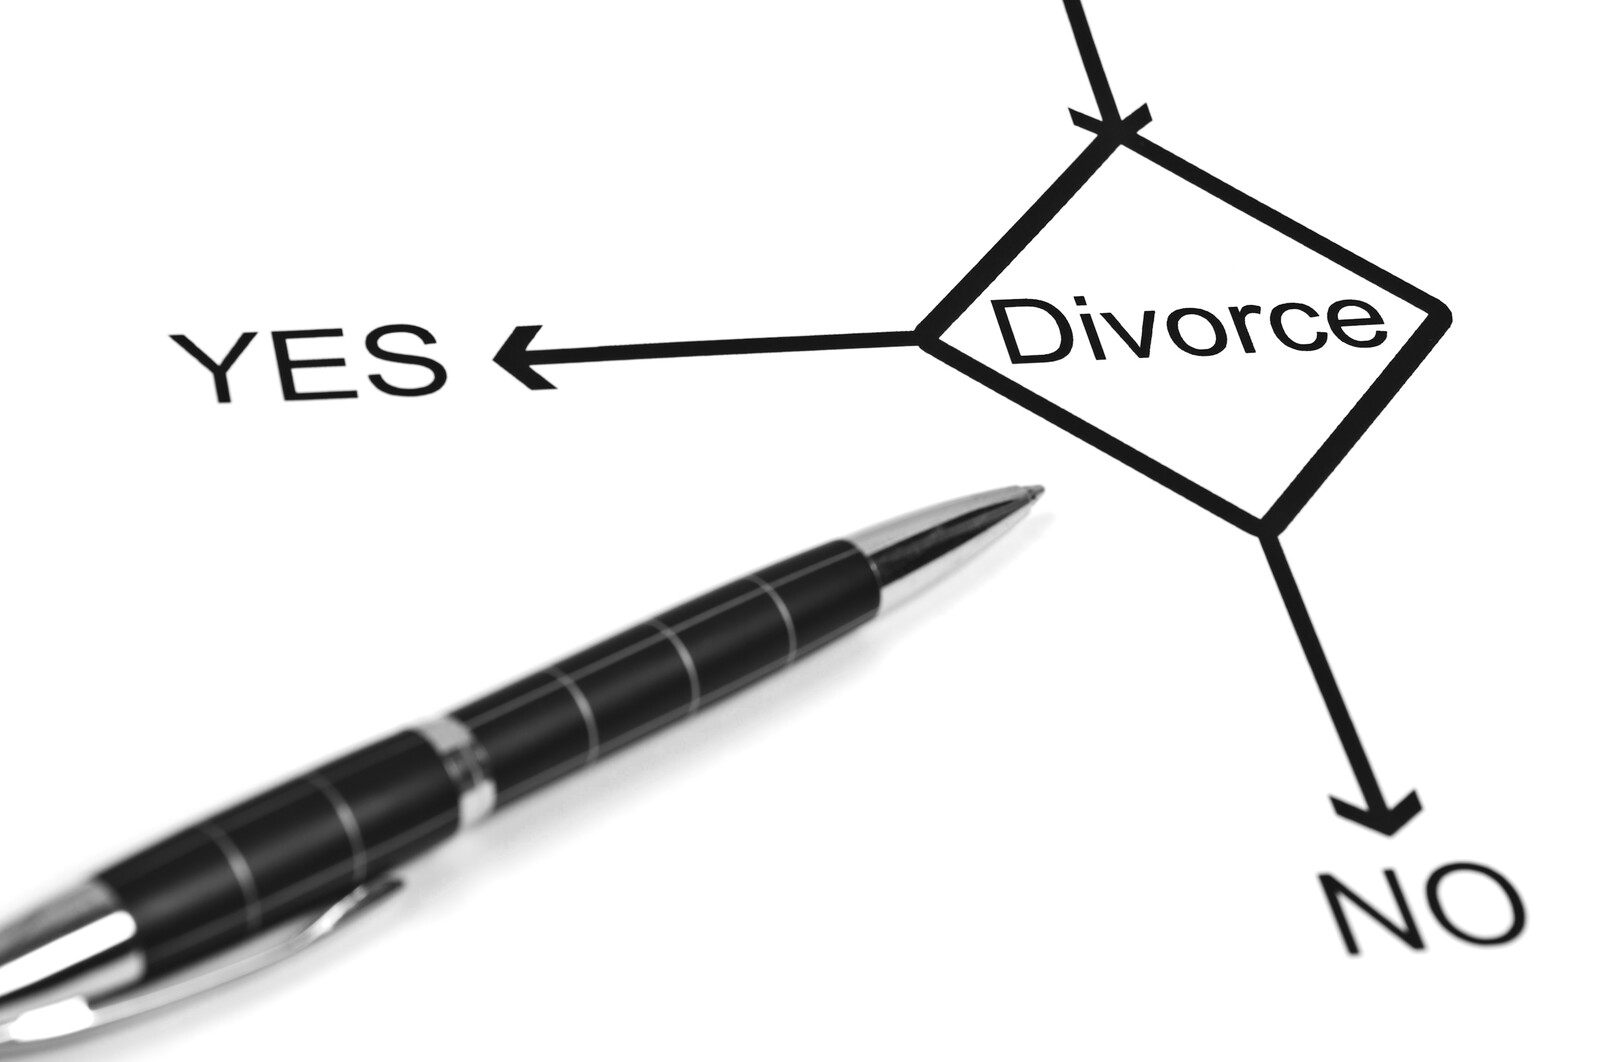 The Valley Of Indecision Trial Separation Bj Mann Affordable Divorce Mediation